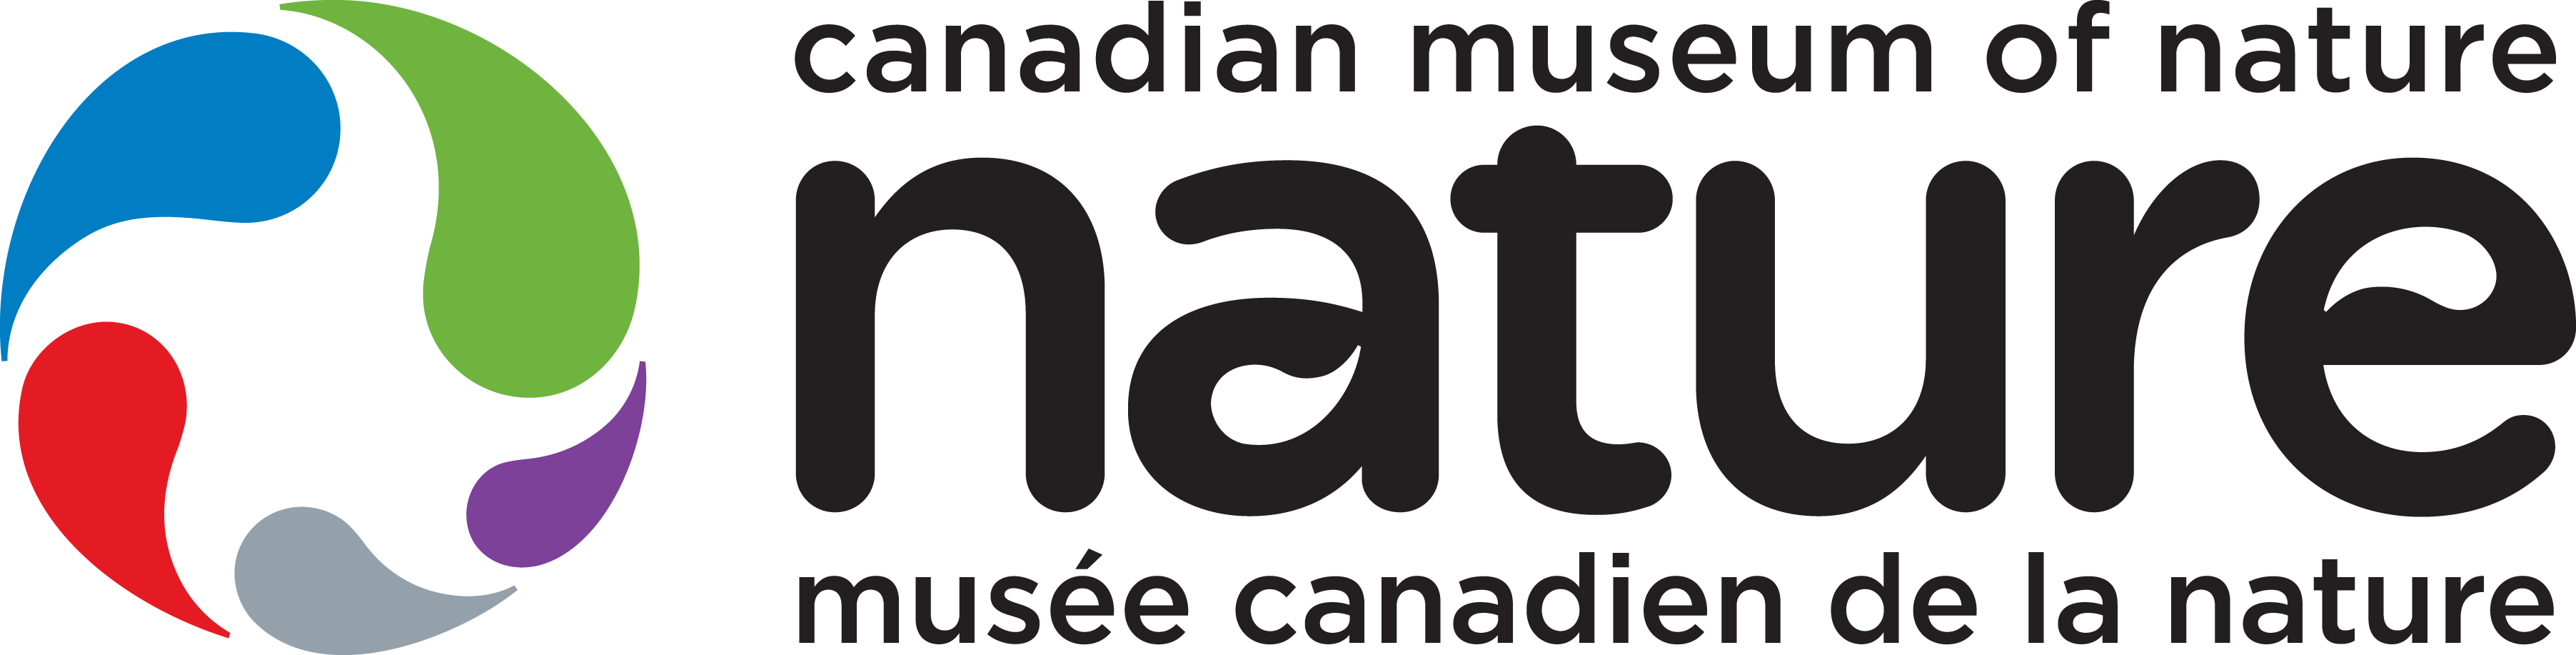 Les algues marines - Musée canadien de la nature